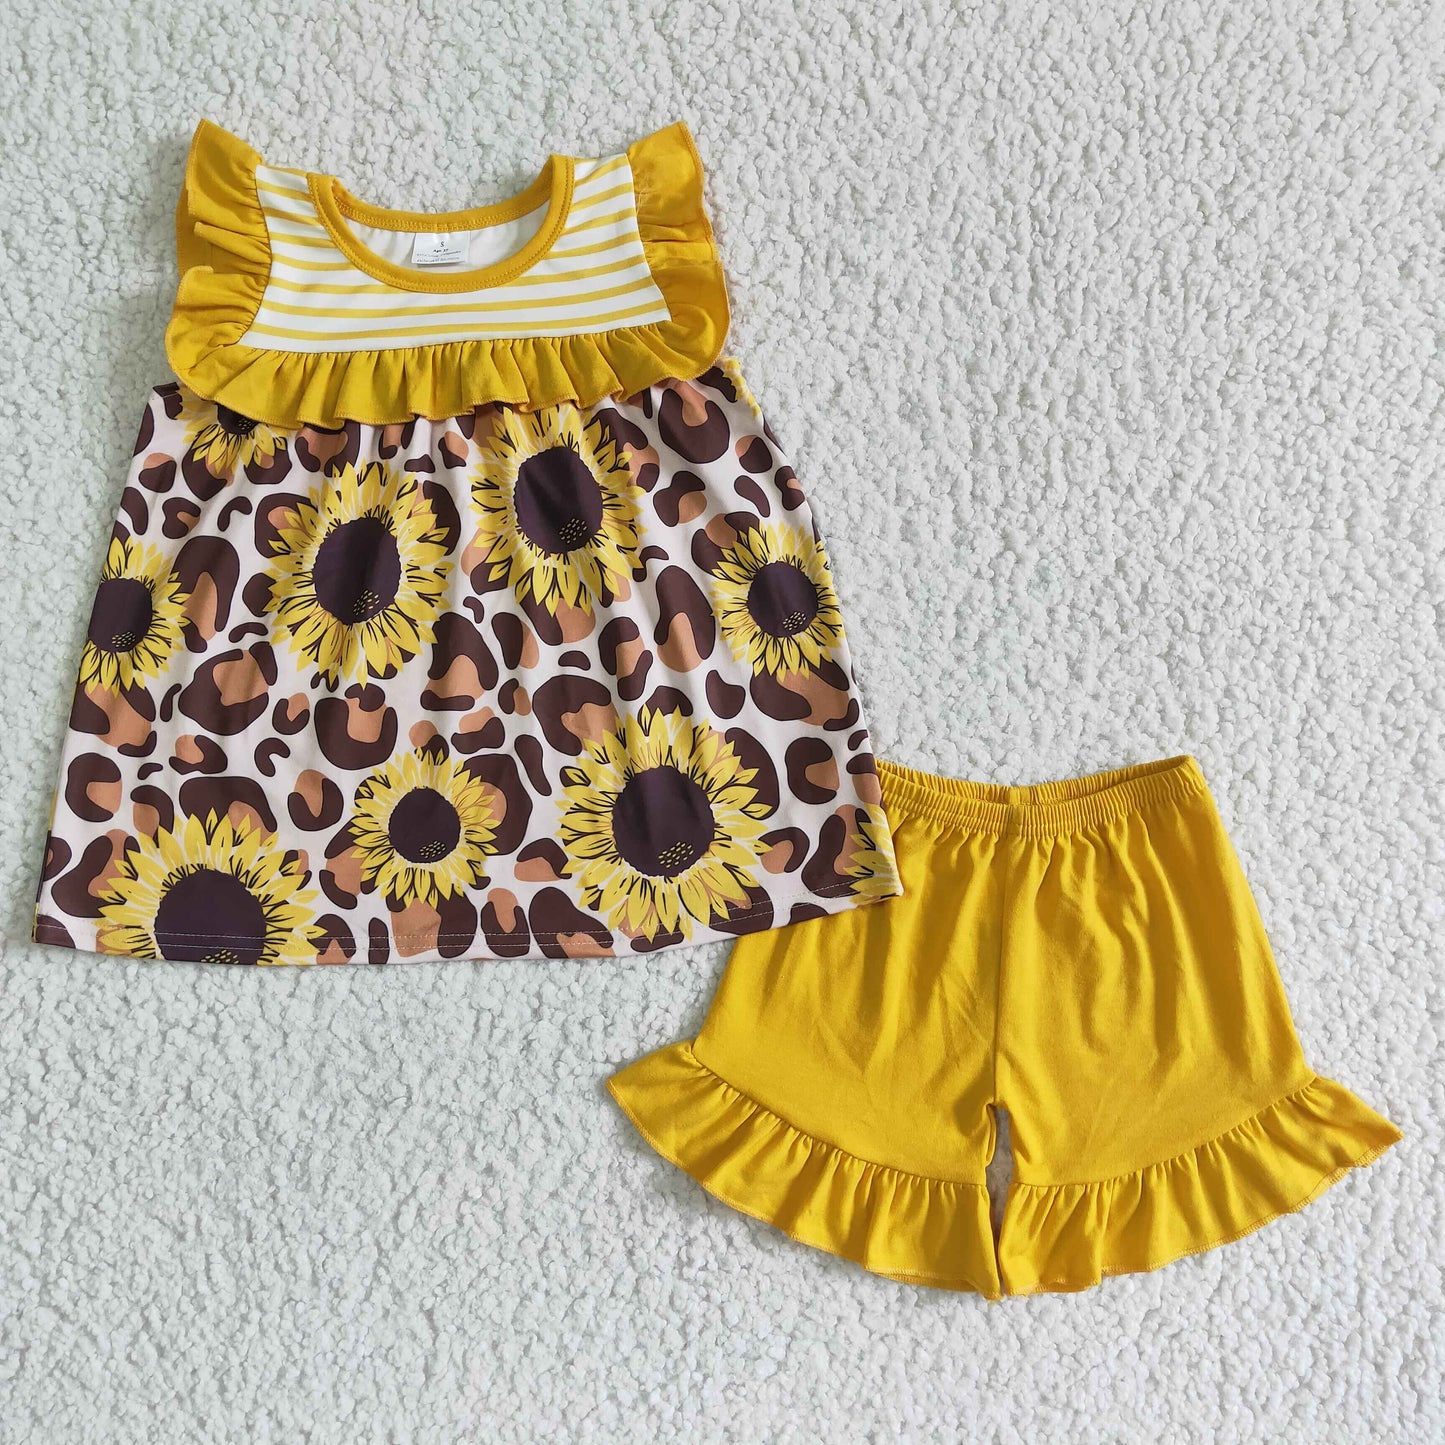 Sunflower leopard tunic yellow shirt girls clothing set